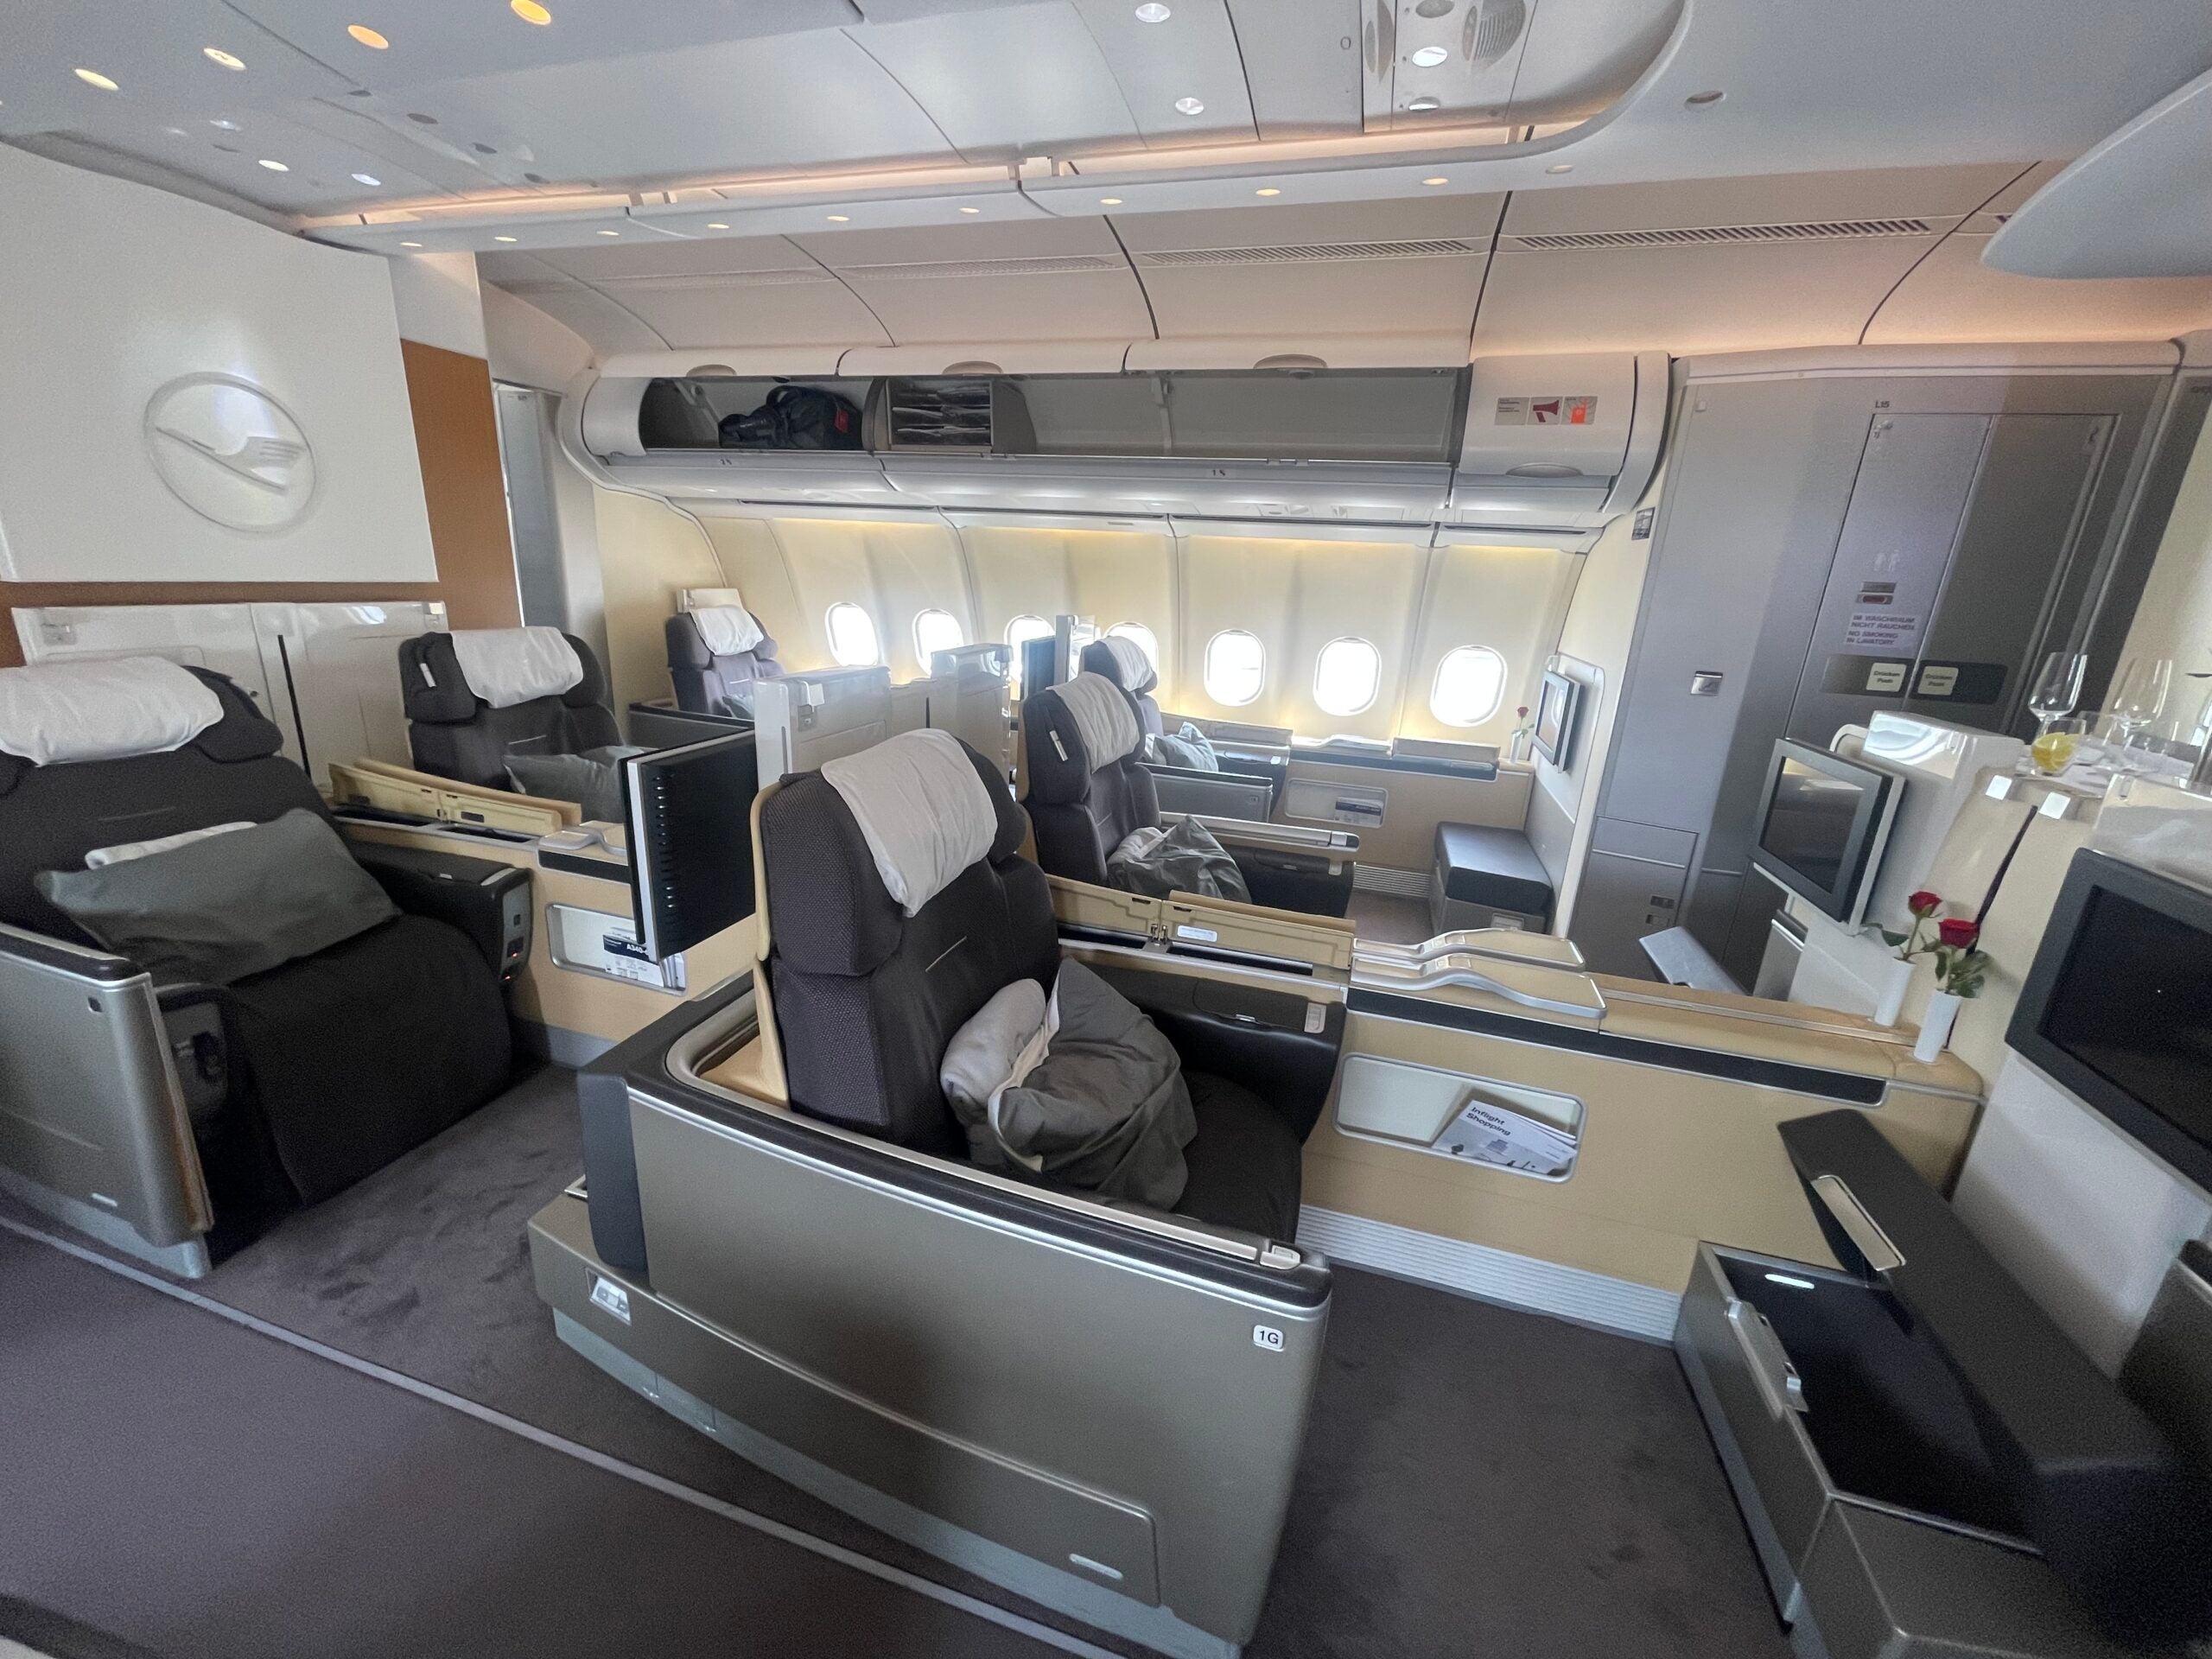 Lufthansa first class A340-600 full profile